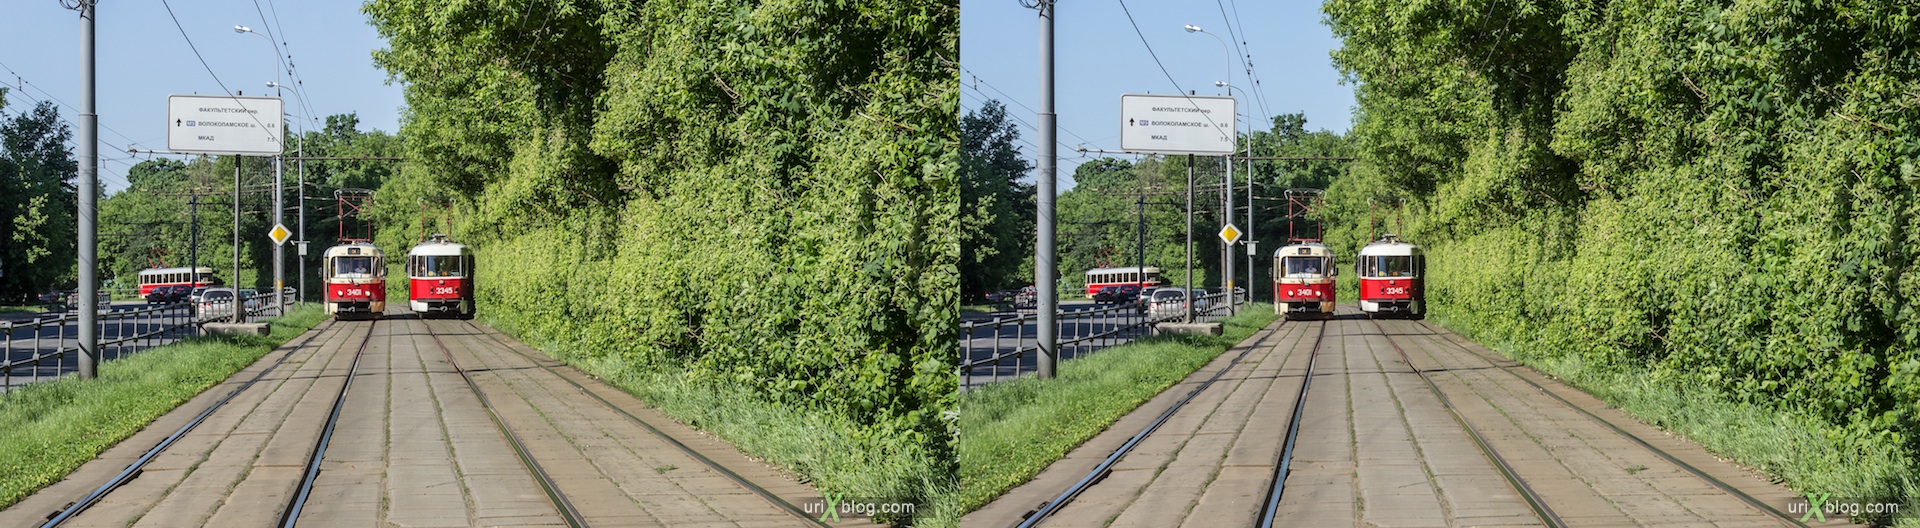 2013, Tram, line, railway, trees, forrest, road, Voykovskaya, Shukinskaya, Moscow, Russia, 3D, stereo pair, cross-eyed, crossview, cross view stereo pair, stereoscopic